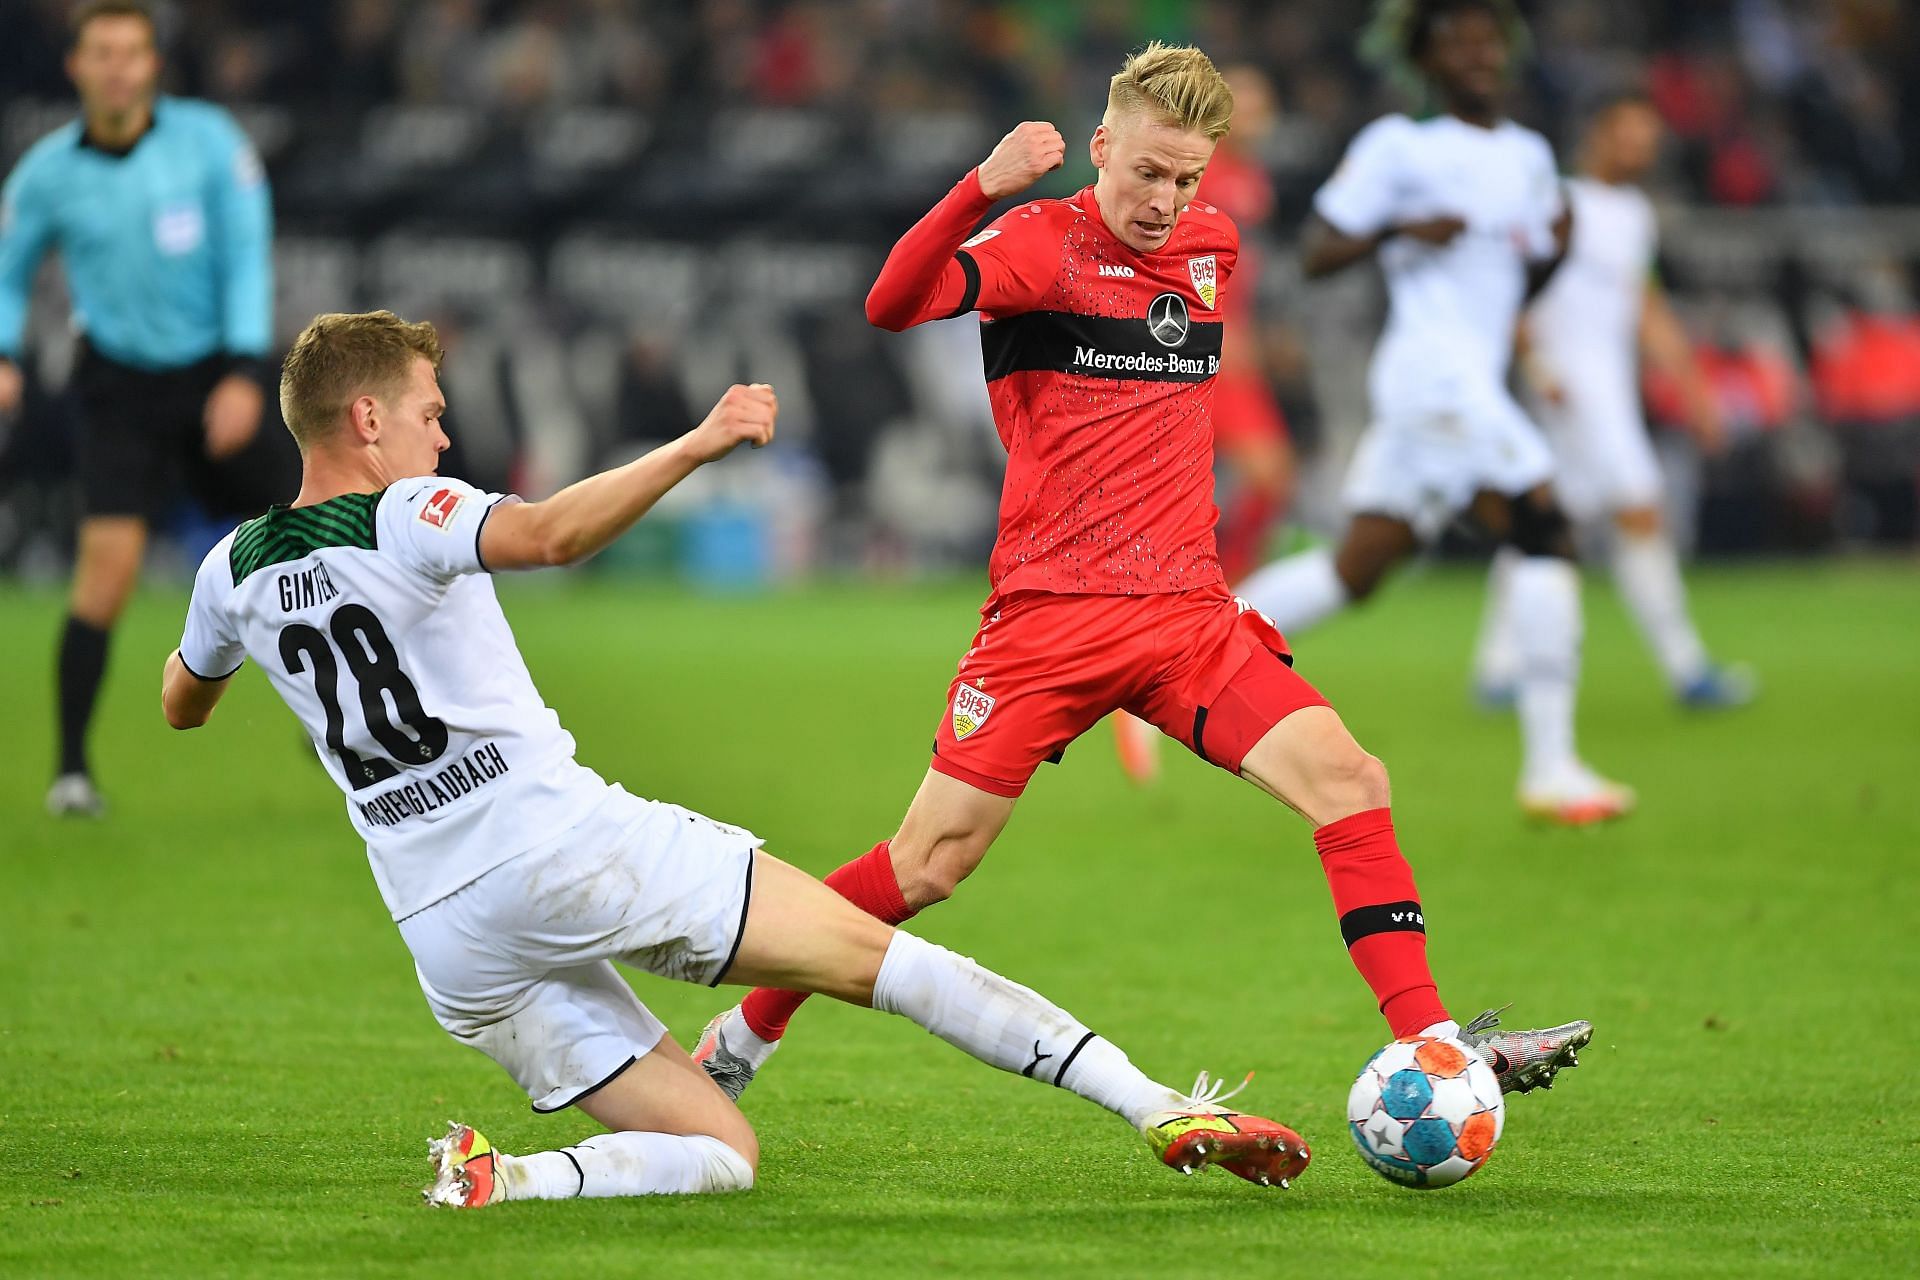 VfB Stuttgart play Union Berlin in a Bundesliga game on Sunday